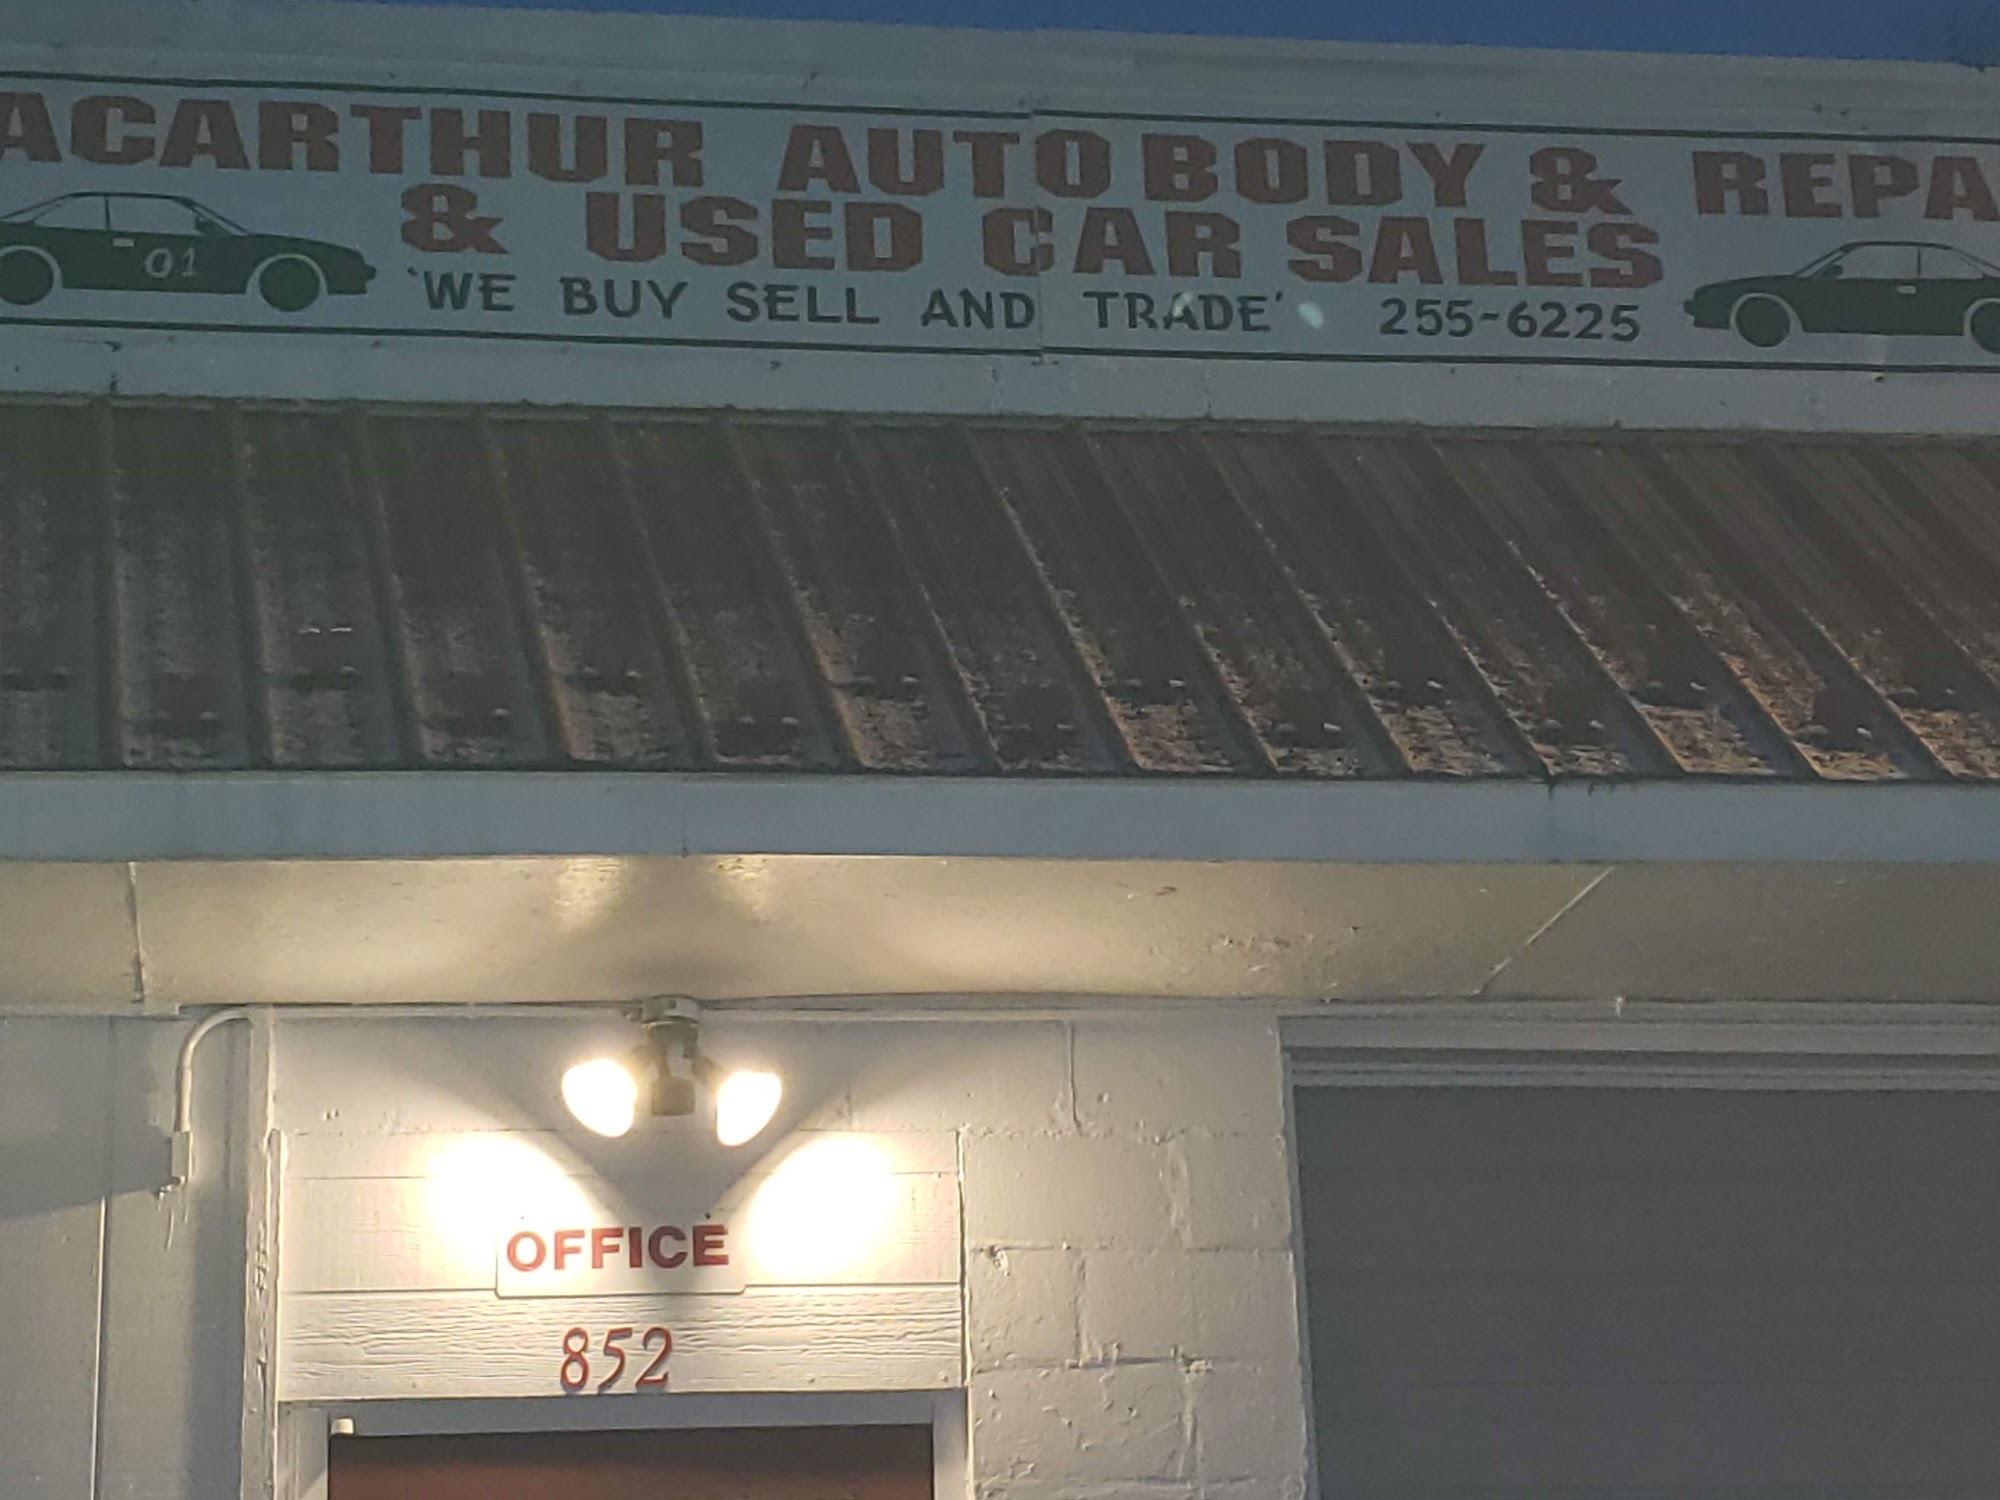 Mac Arthur Auto Body & Repair